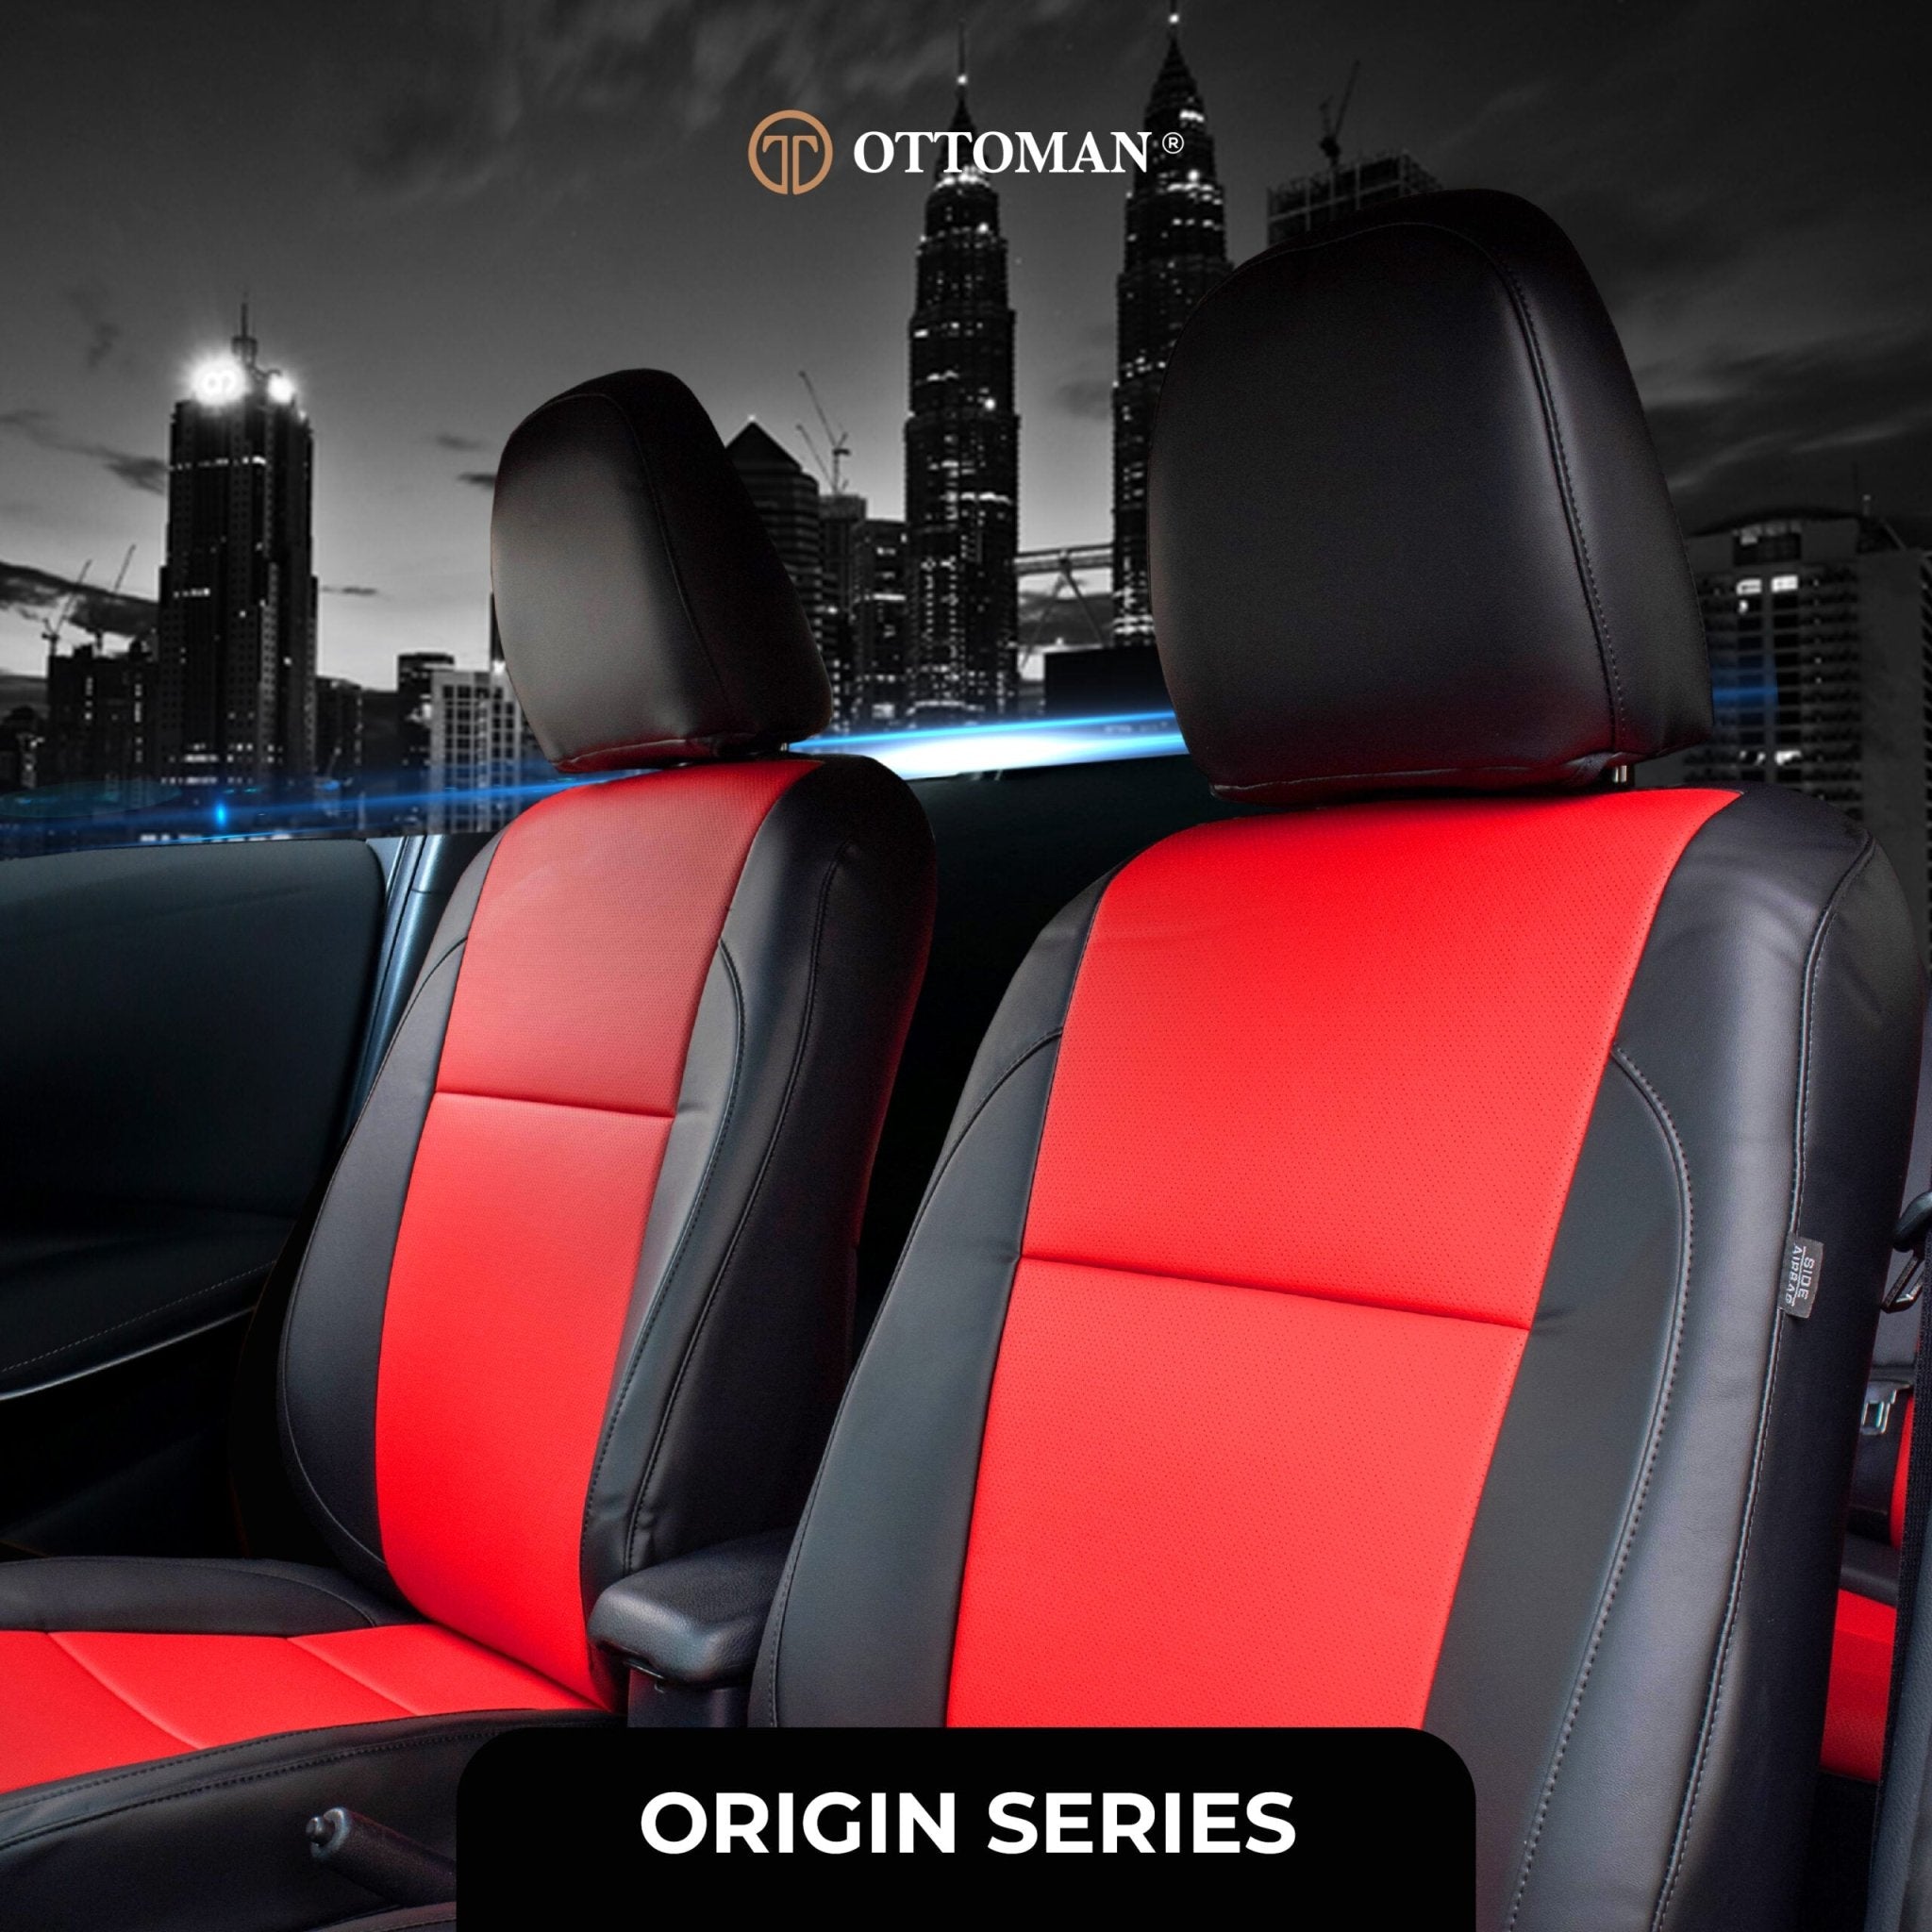 Proton Iriz (2014-Present) Ottoman Seat Cover Seat Cover in Klang Selangor, Penang, Johor Bahru - Ottoman Car Mats